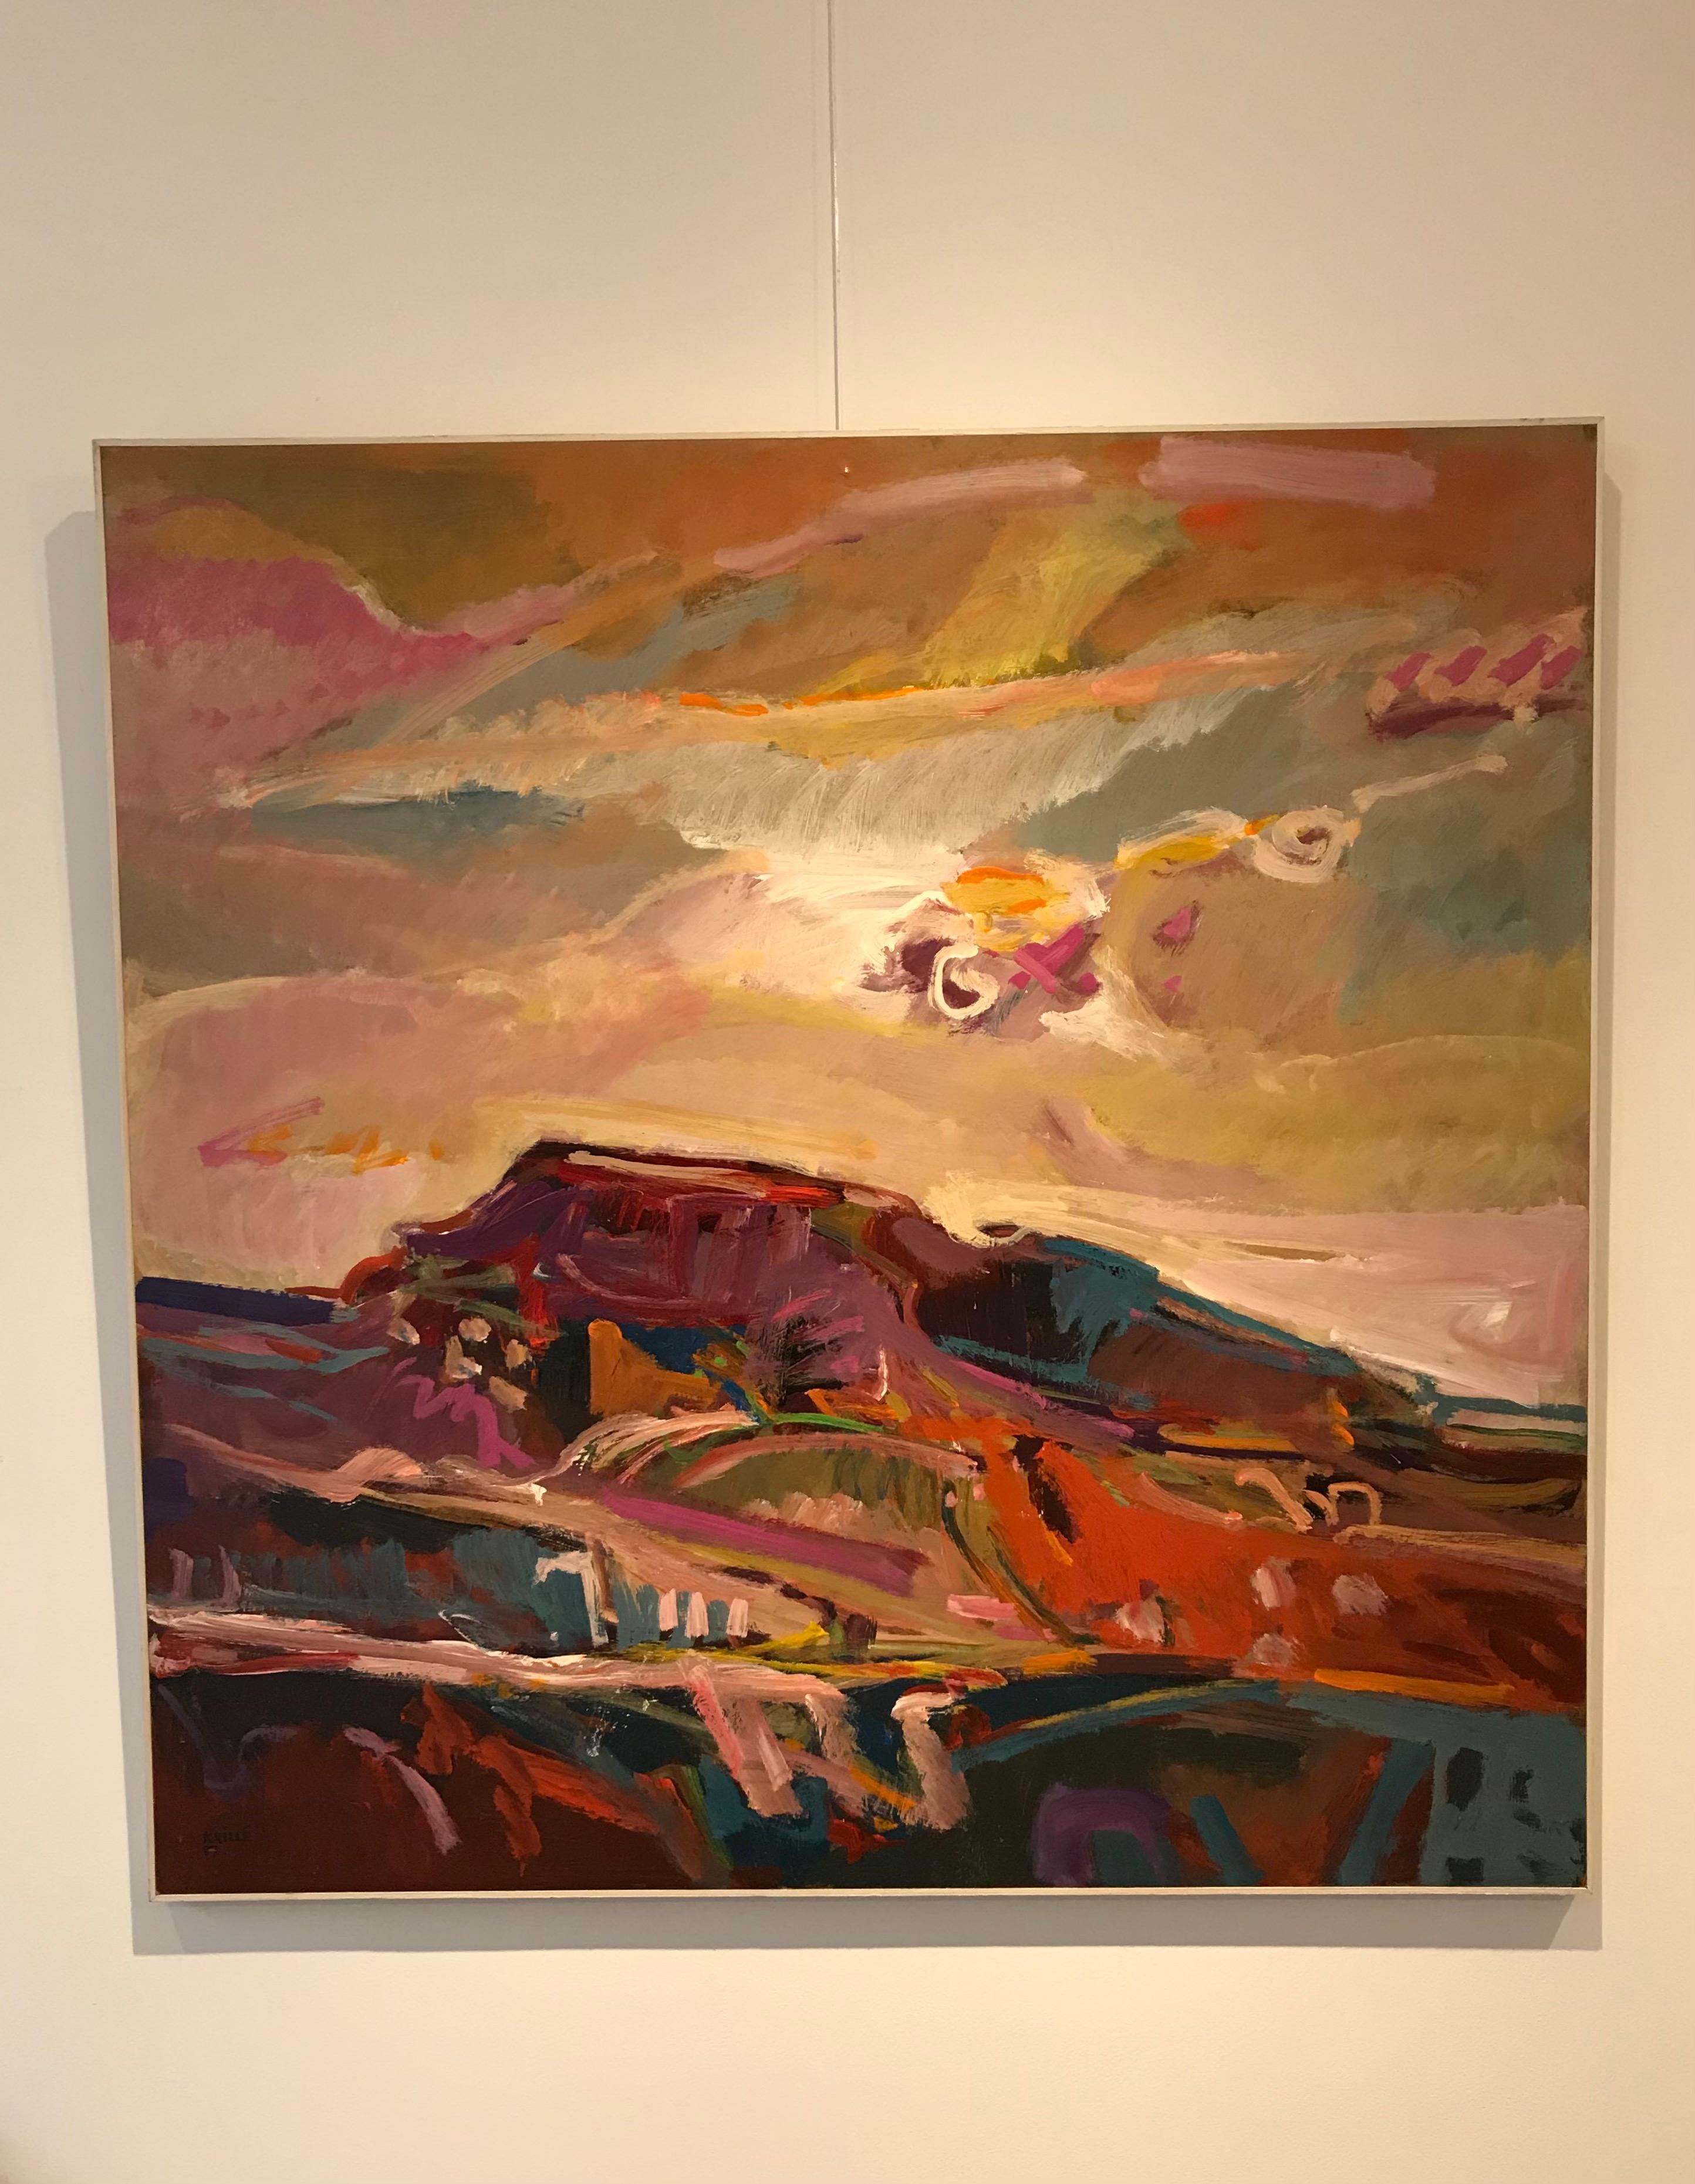 Sunset - Tableau n°13 by Jean Krillé - Oil on wood 100x100 cm - Painting by Jean Krille